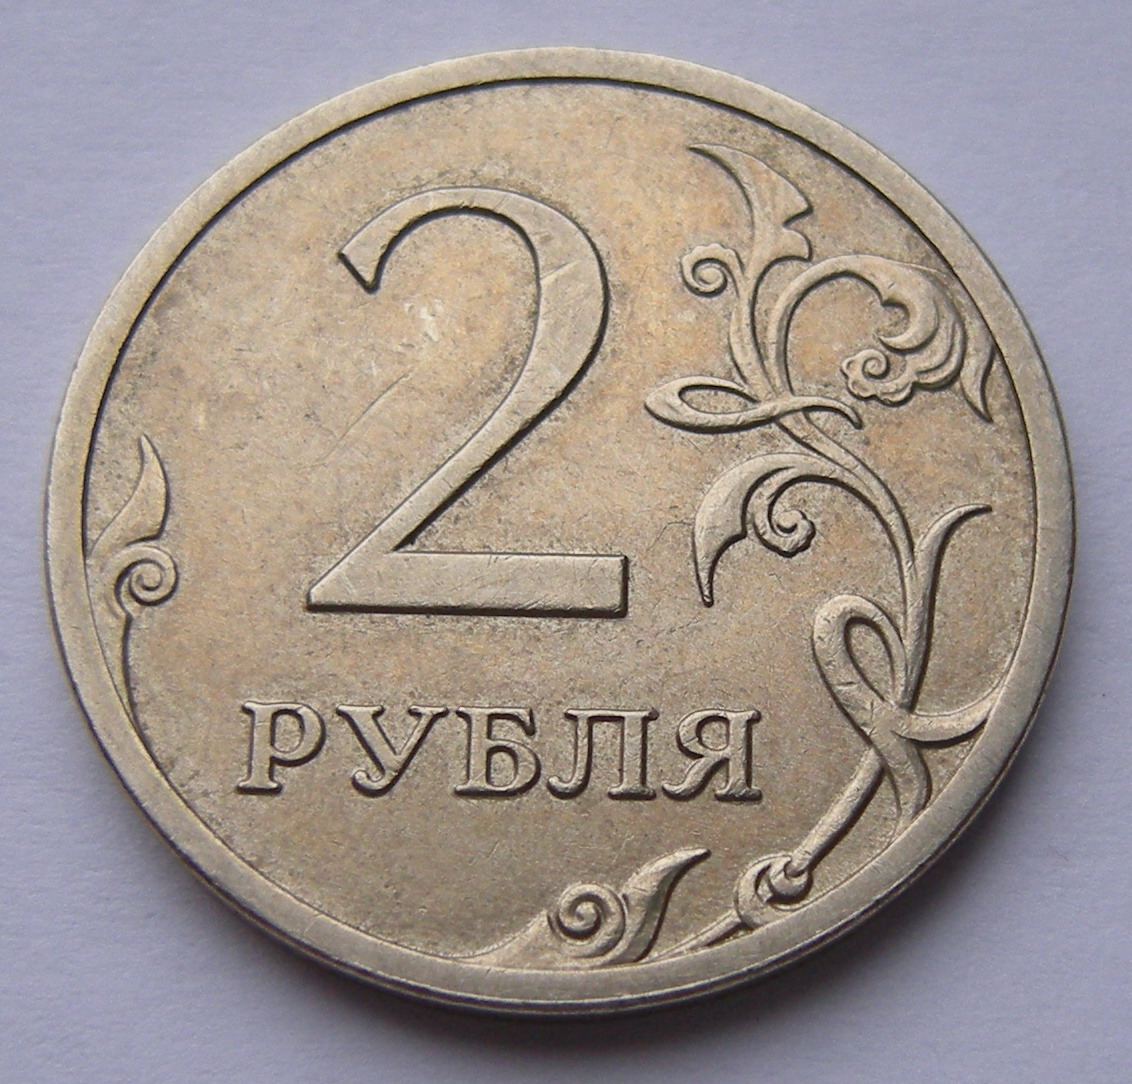 Монета 11 5 рублей. Монета 2 рубля. Монеты 1 2 5 рублей. Изображение монет. Монеты 1 руб 2 руб.